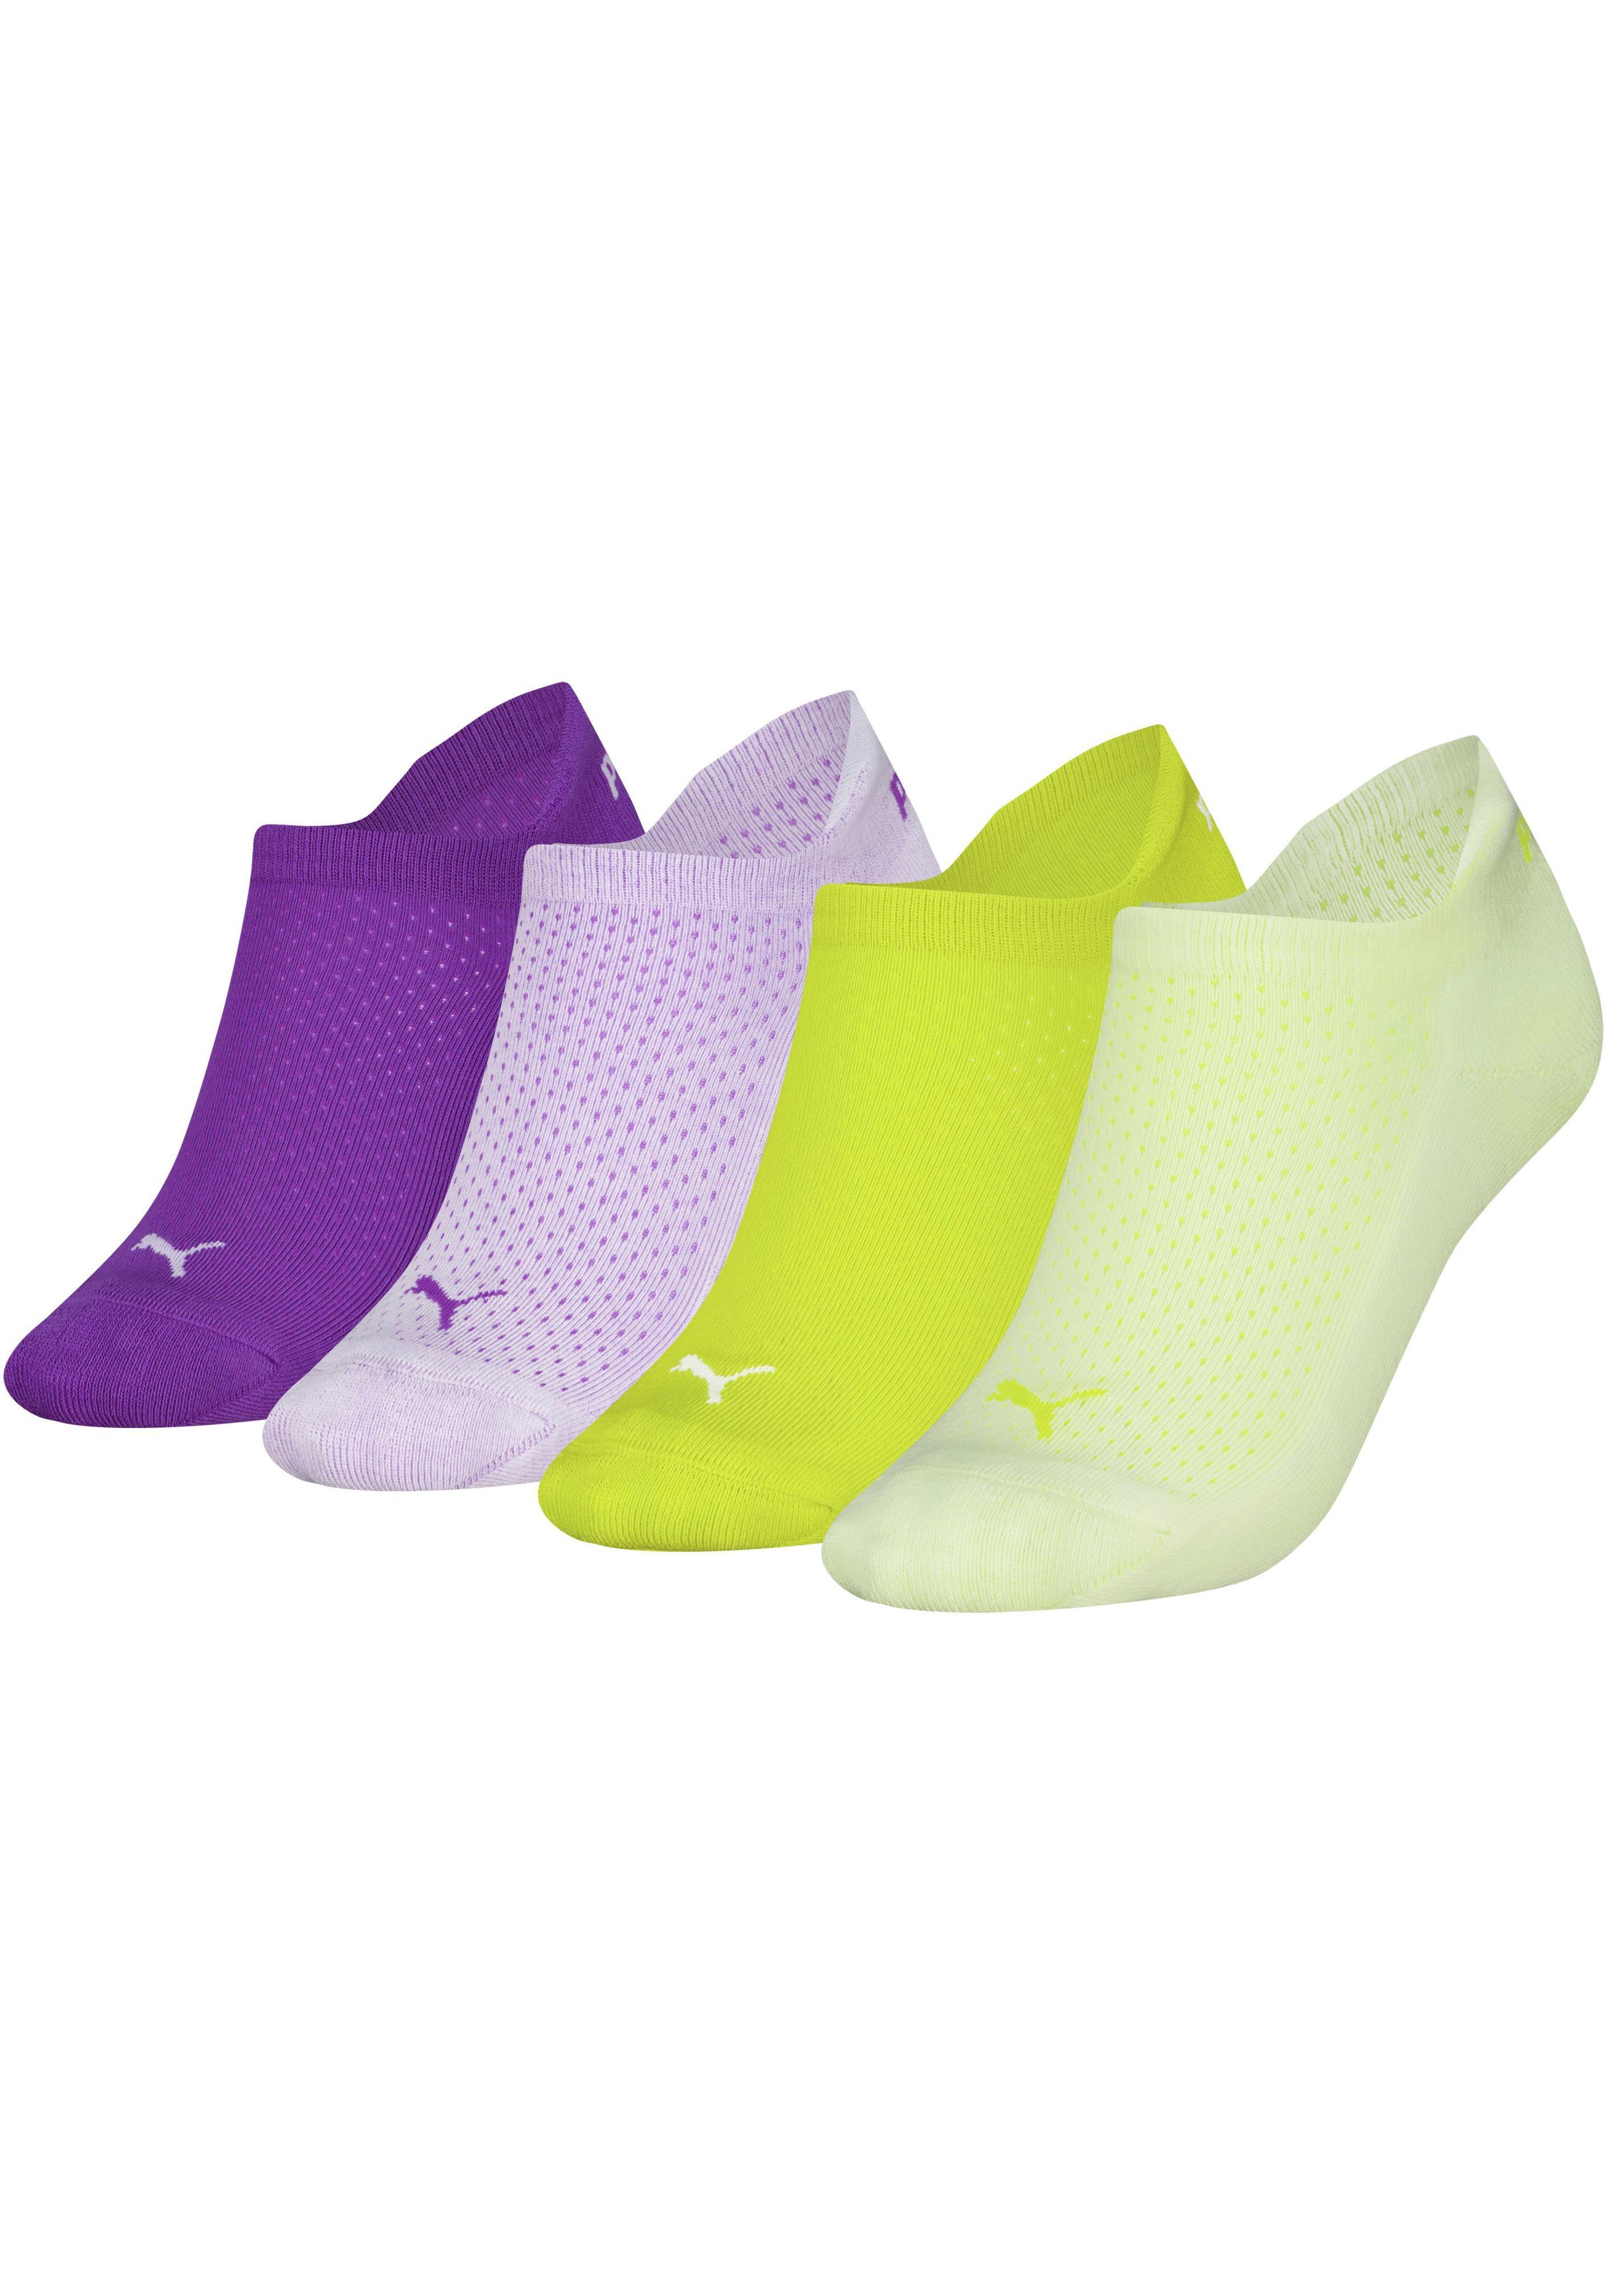 PUMA Sneakersocken (4-Paar) in stylischen Sommerfarben | Sneakersocken